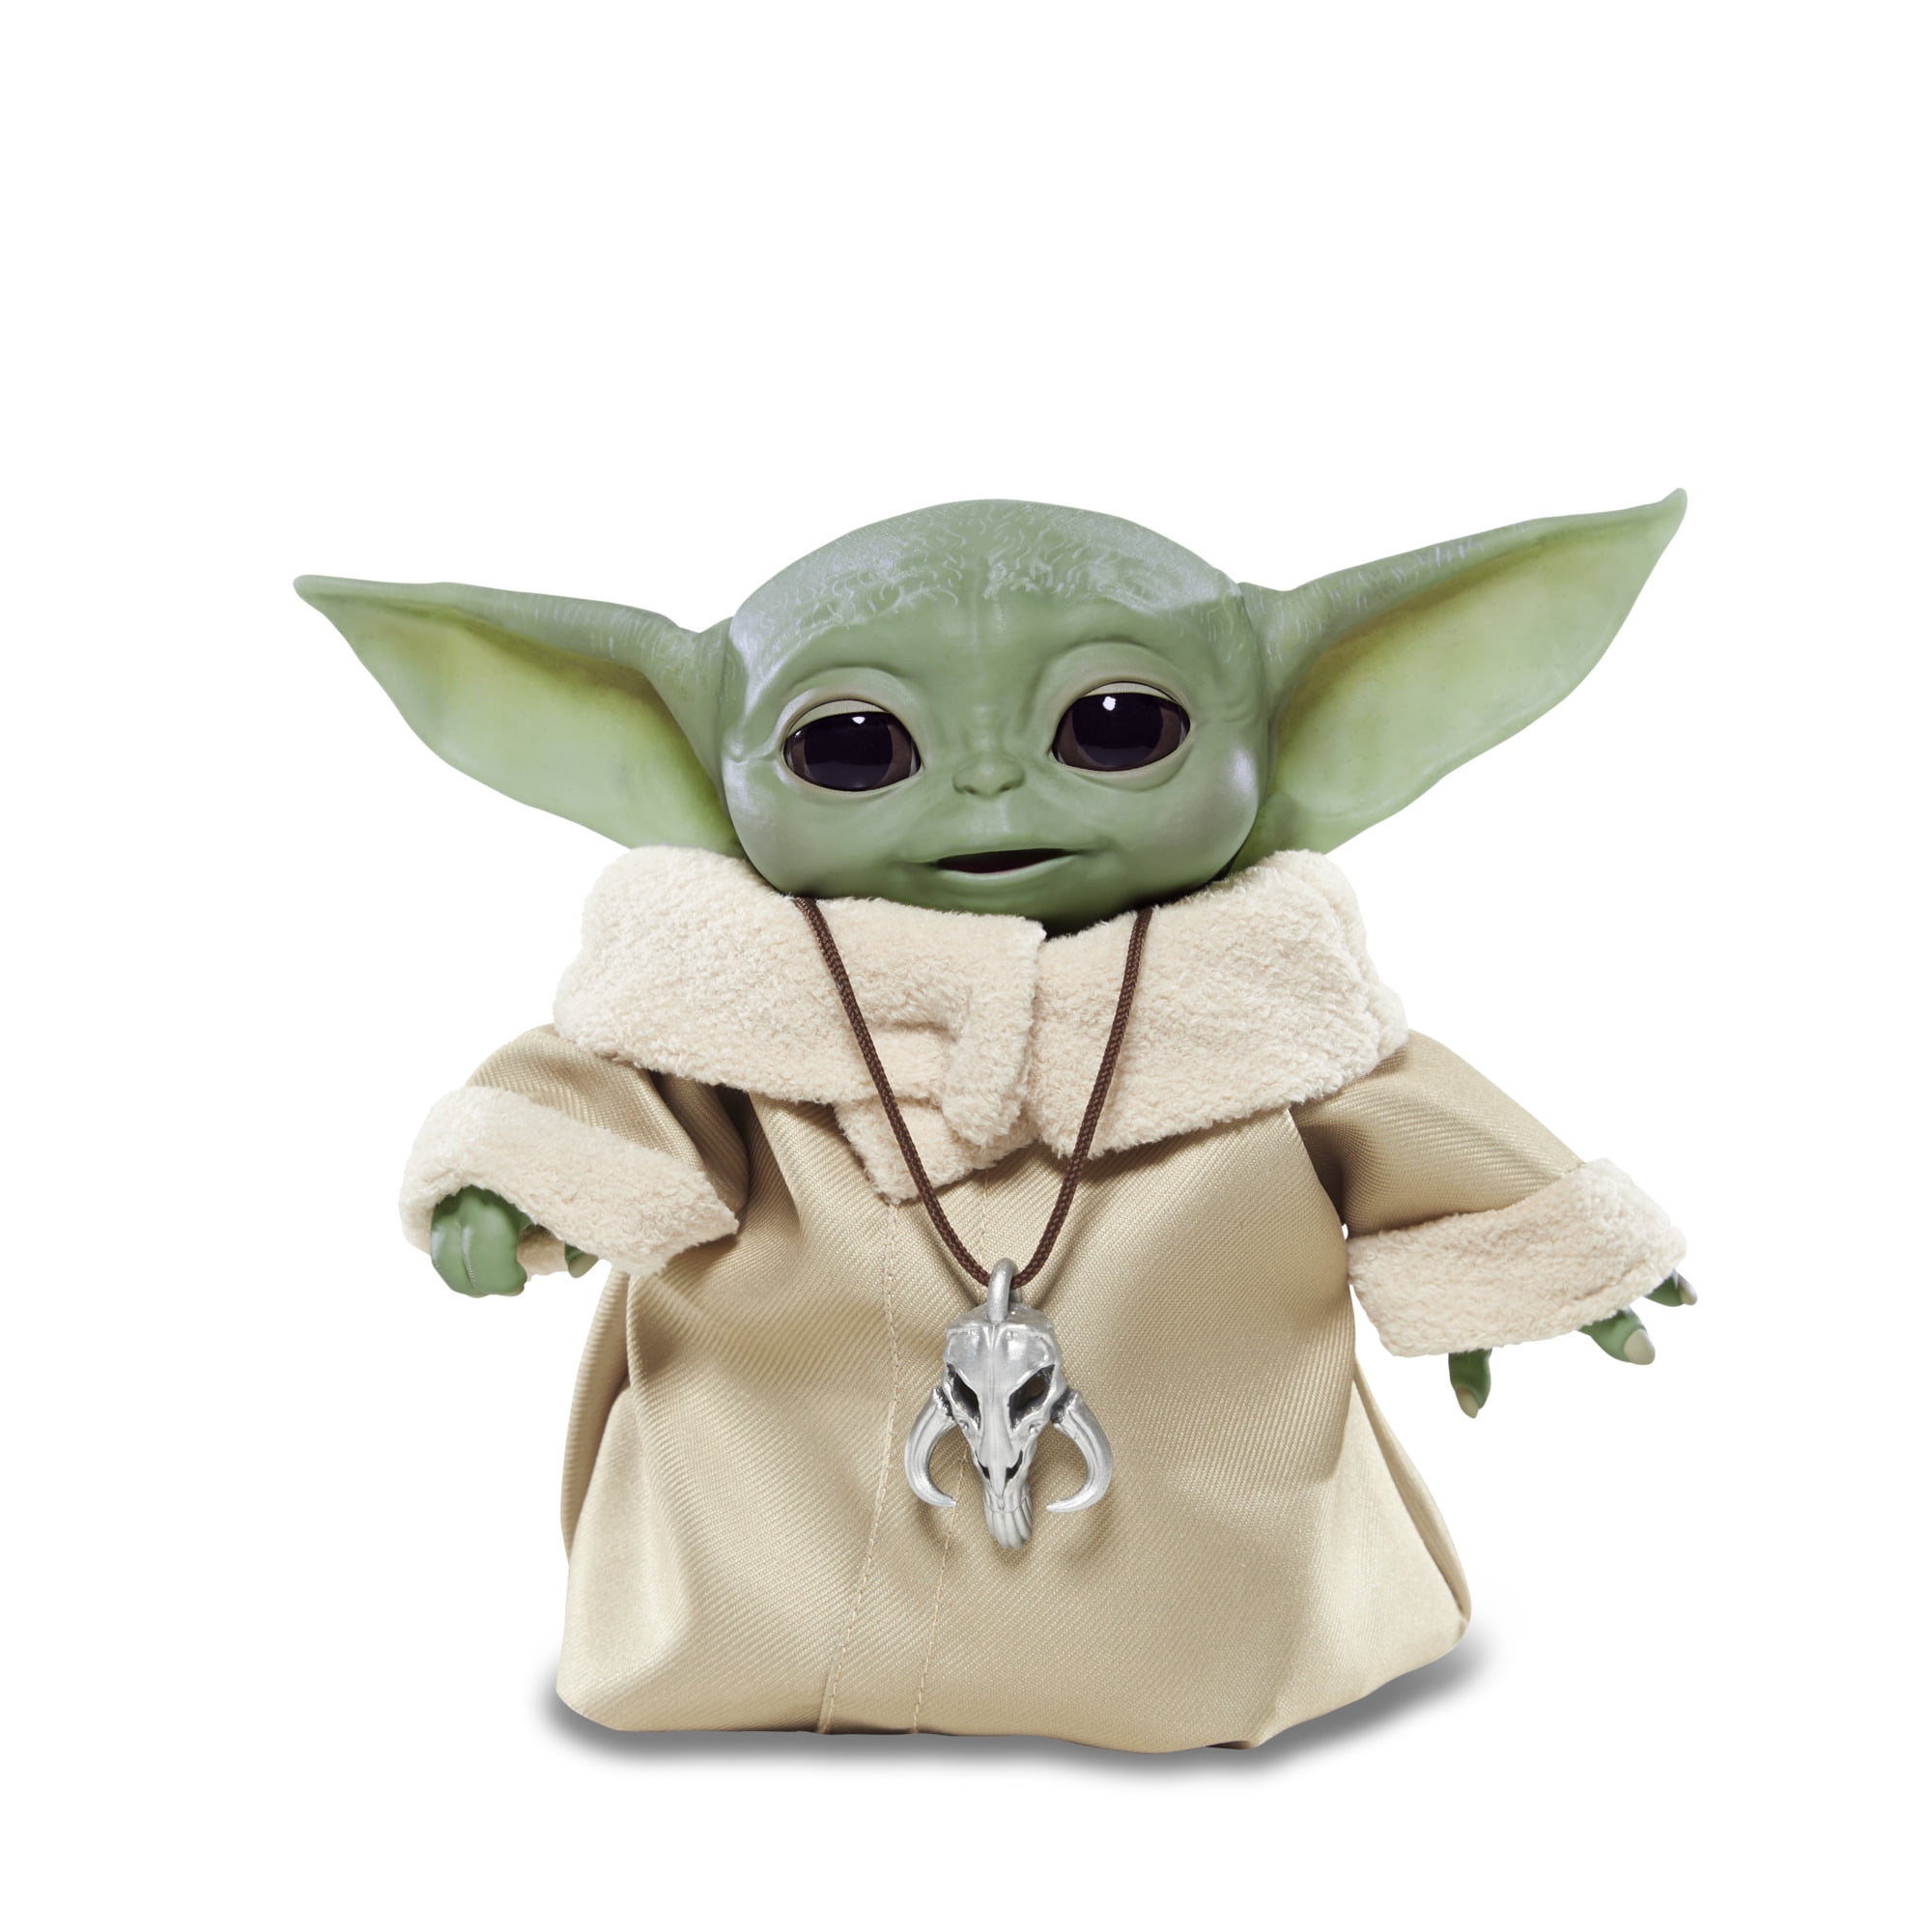 Star Wars The Child Animatronic Edition Aka Baby Yoda With Over